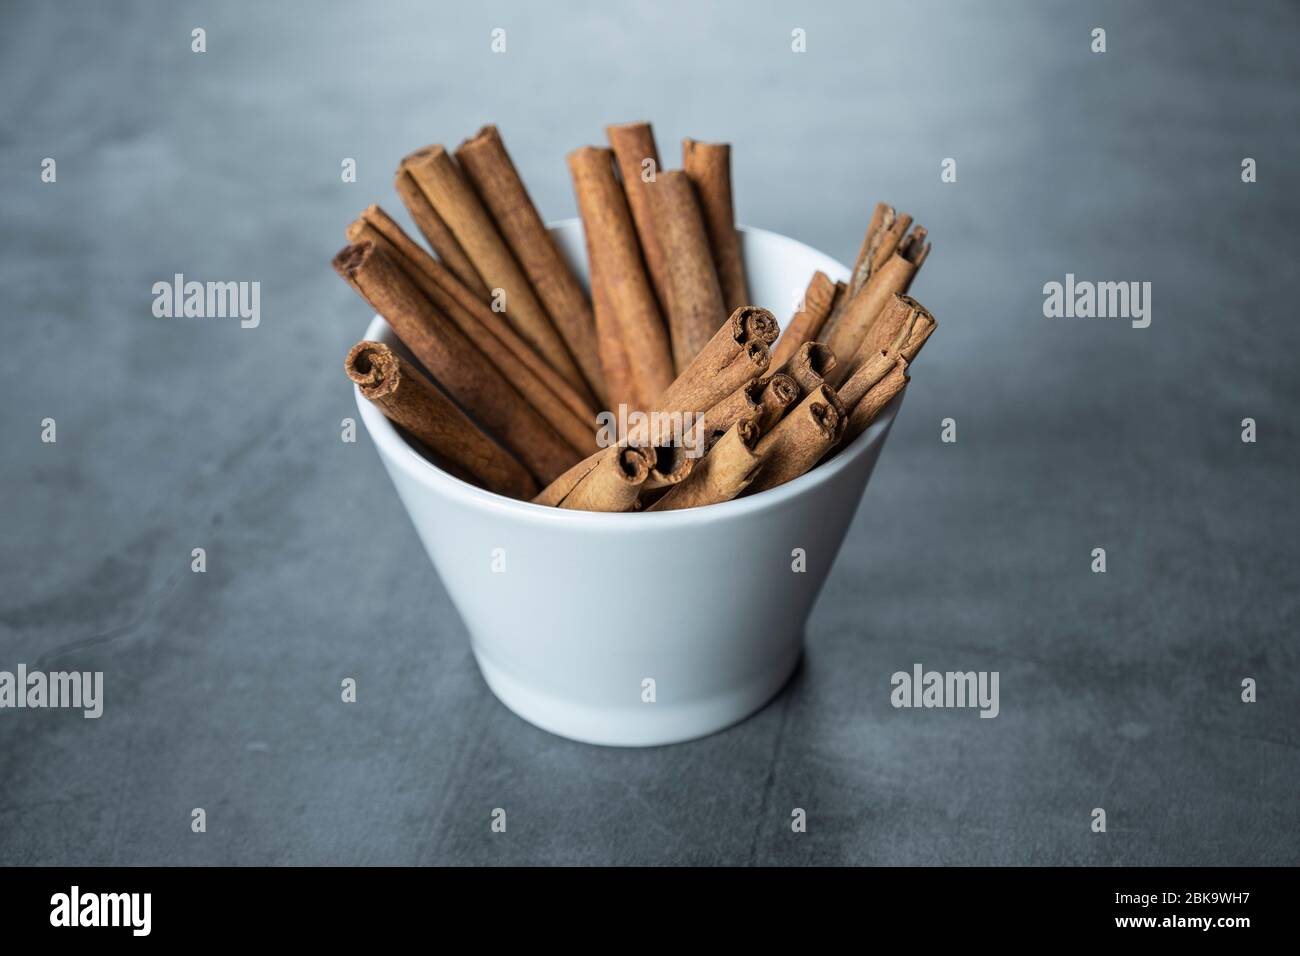 Cinnamon sticks in white porcelain bowl. Stock Photo